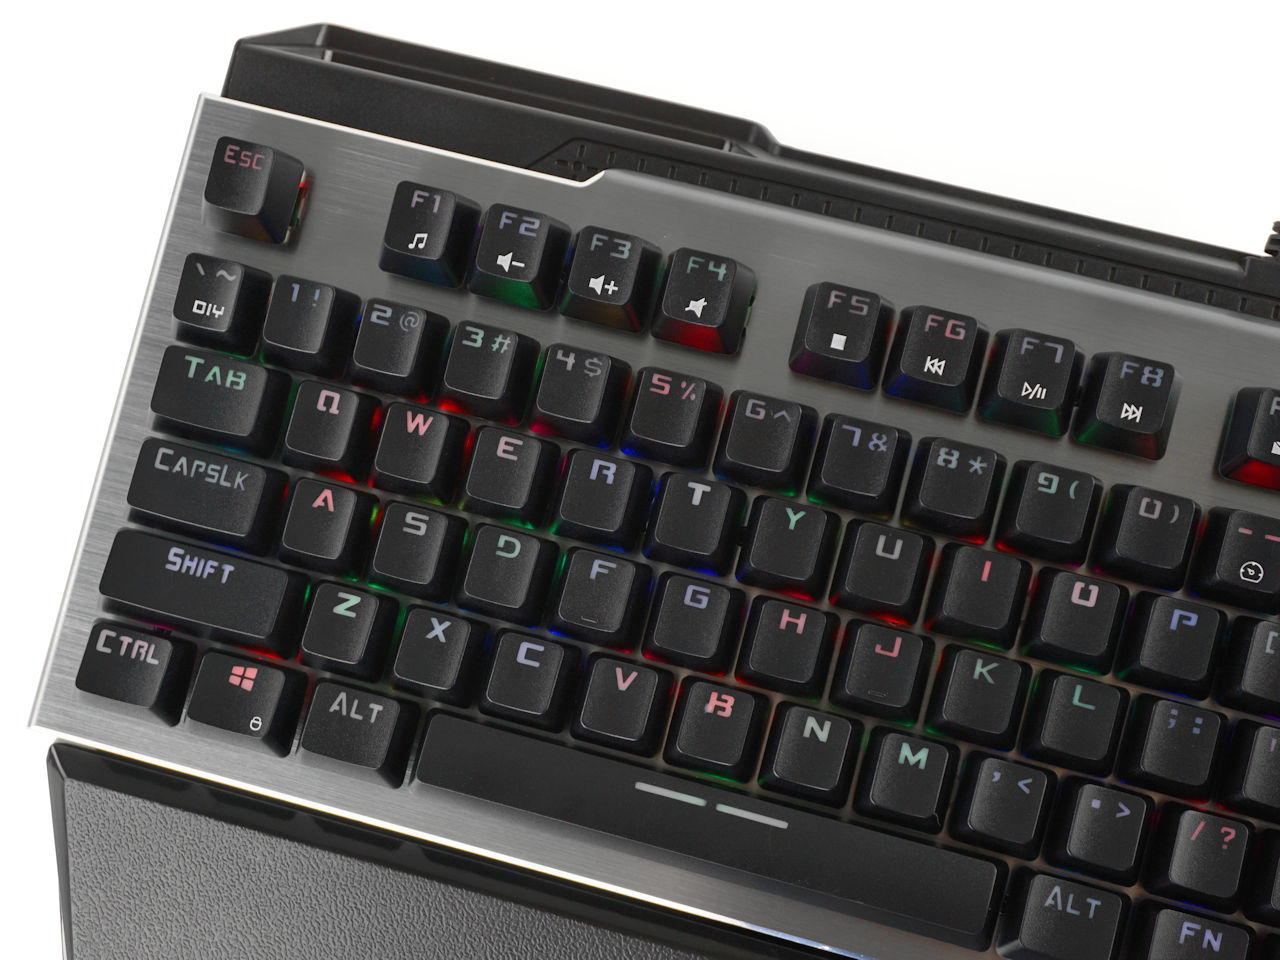 GALAX Gaming Keyboard